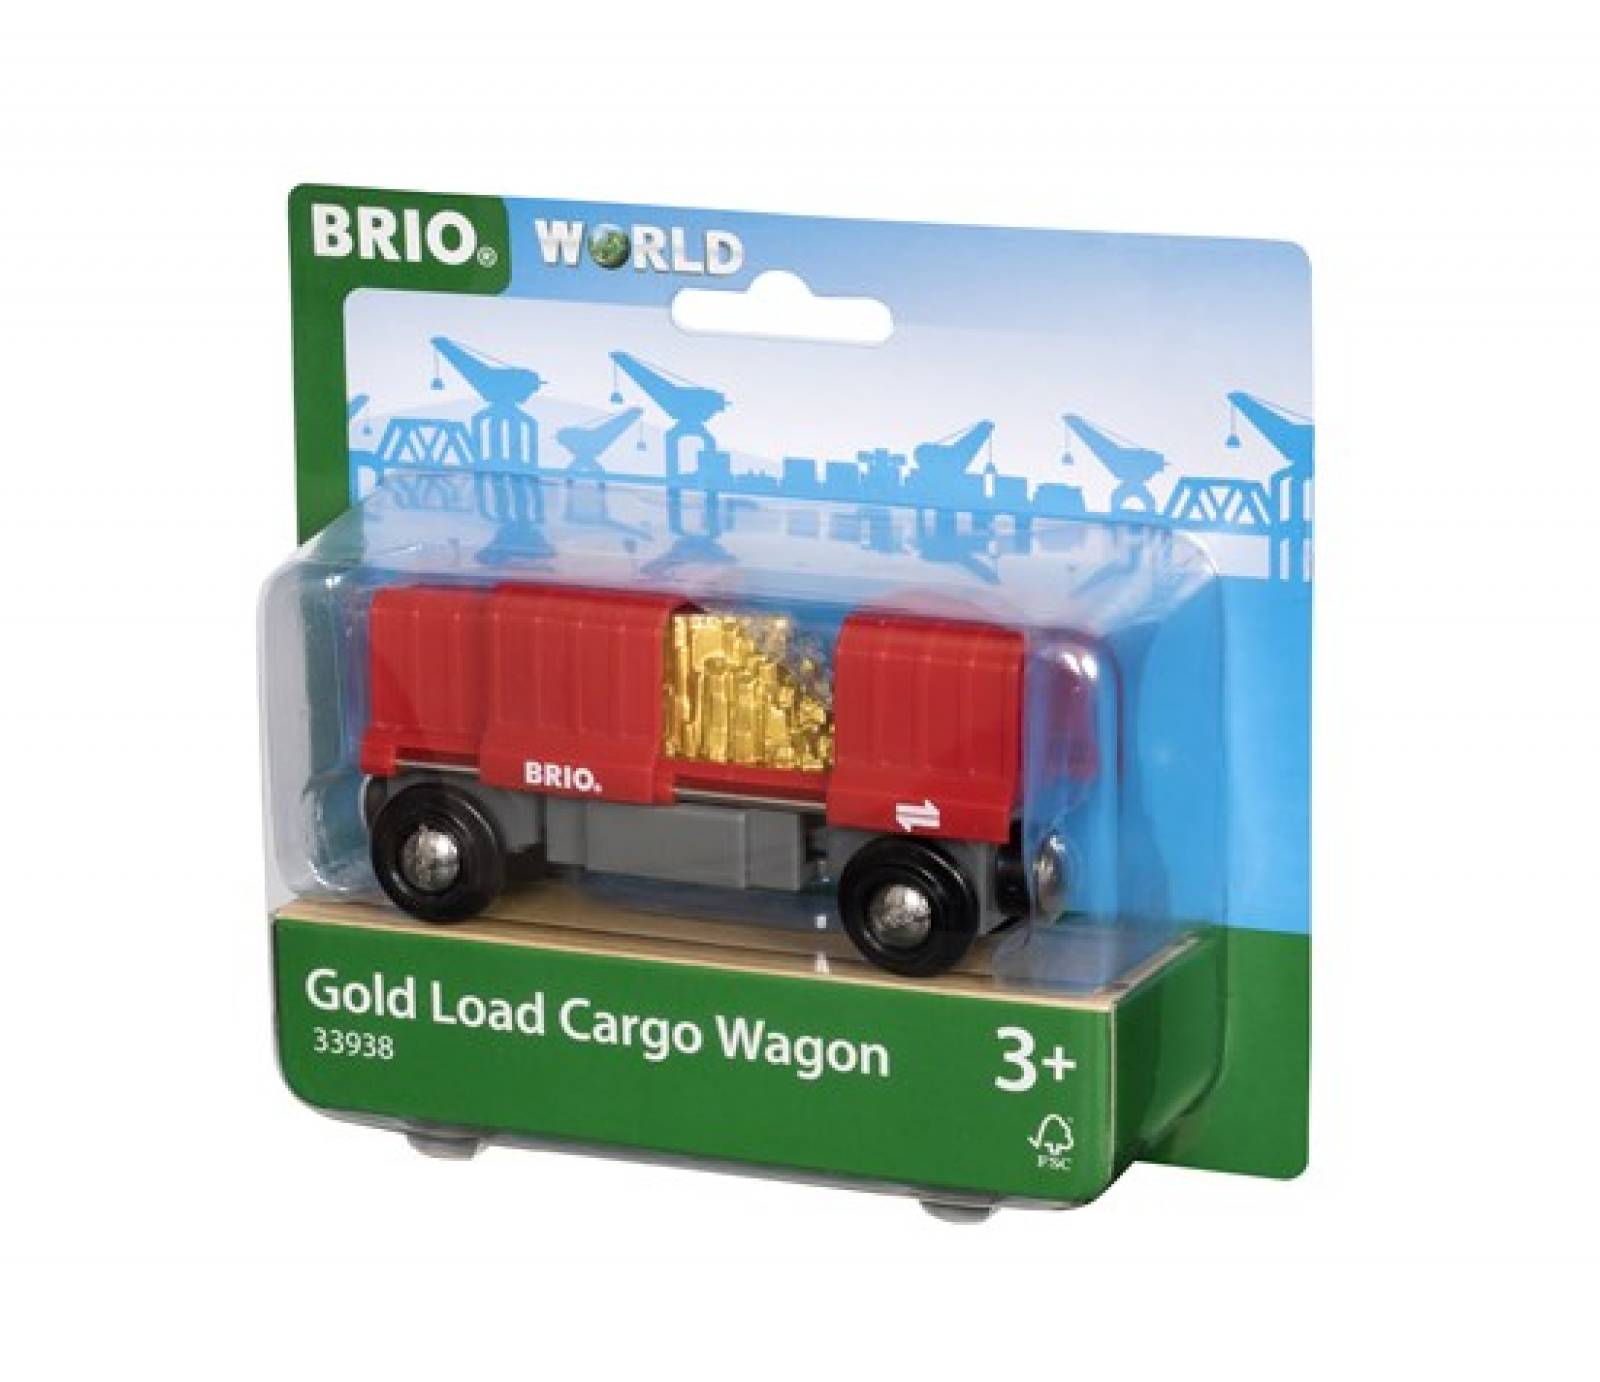 Gold Load Cargo Wagon Carriage BRIO Wooden Railway